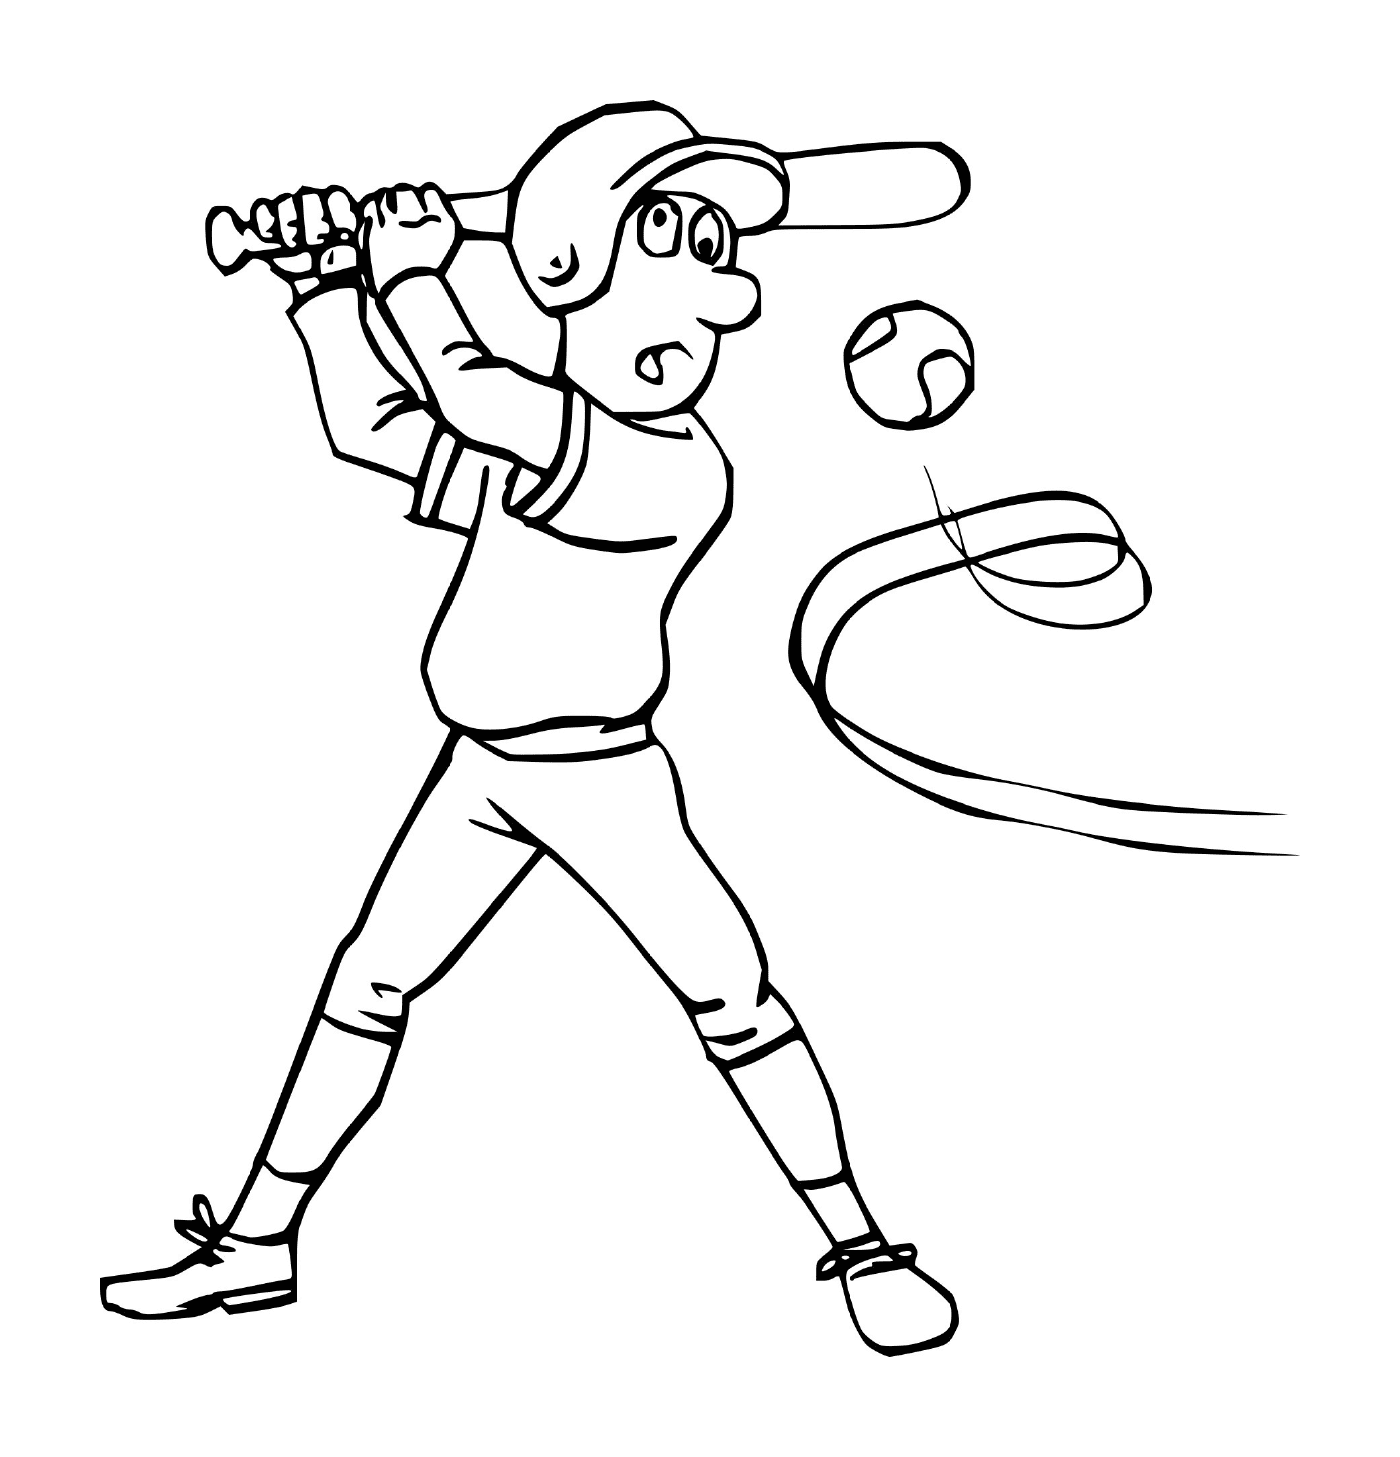  Sport, baseball, man hitting a ball 